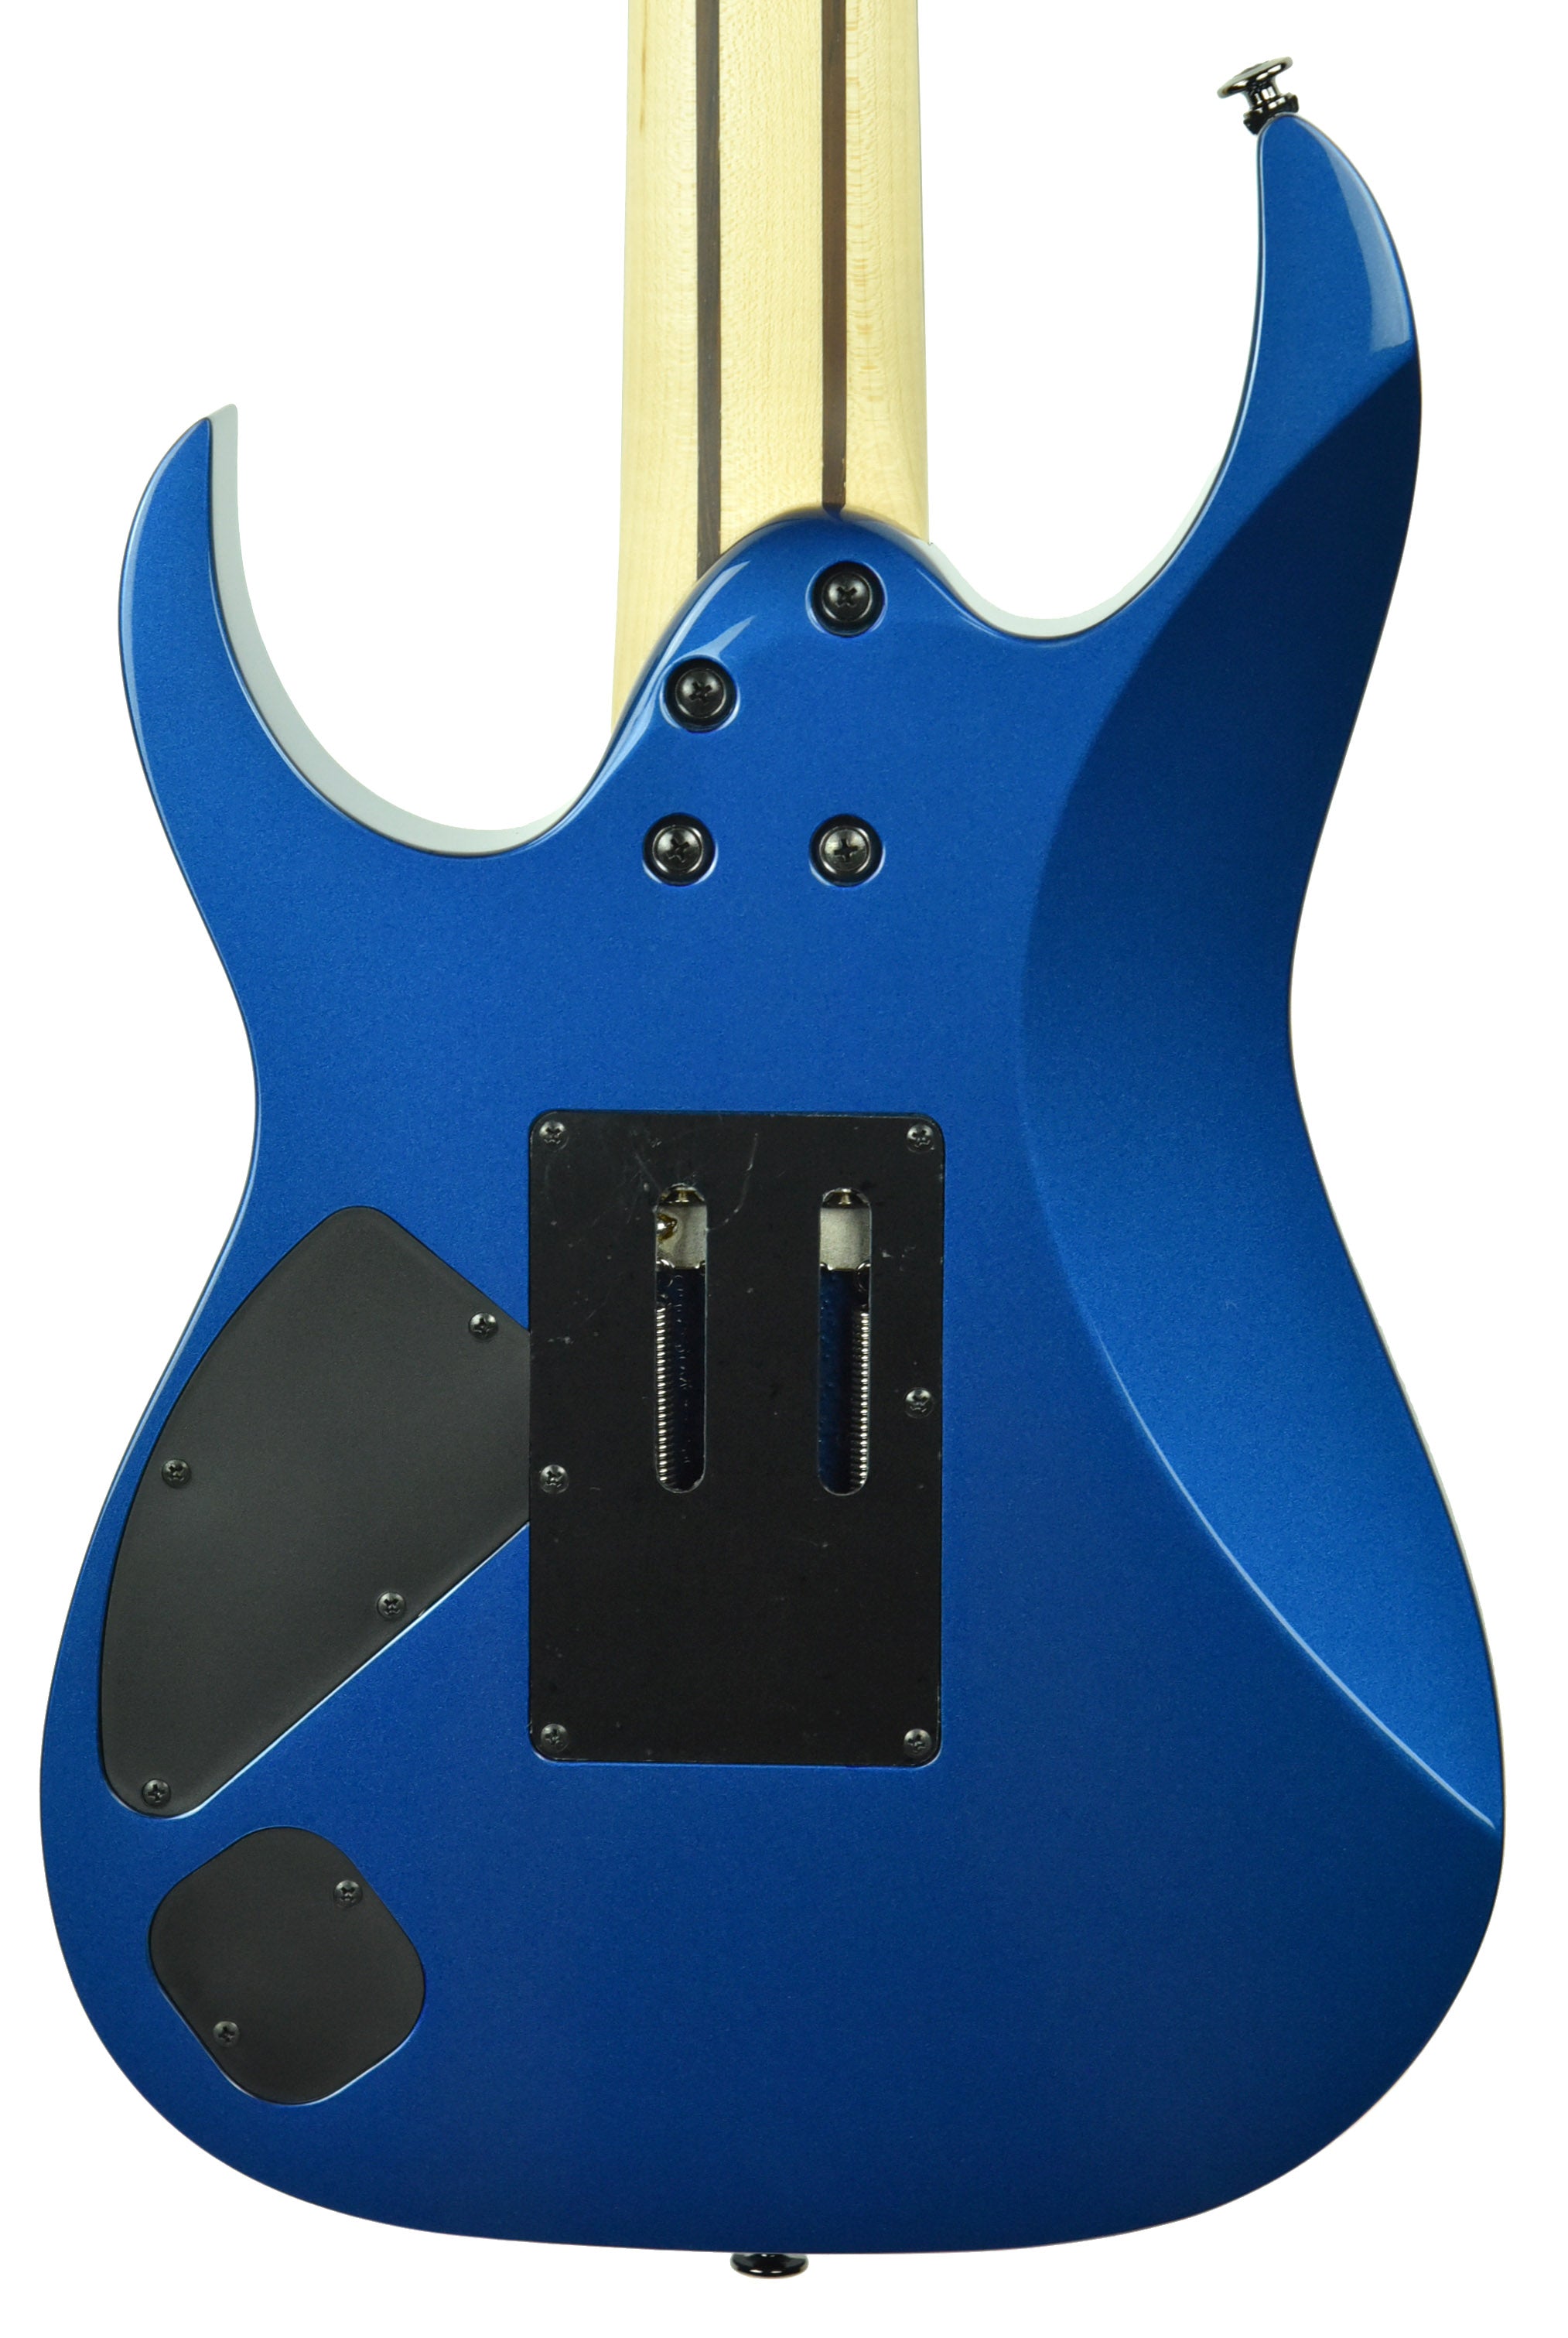 Used Ibanez Prestige RG752 7 String Electric Guitar in Cobalt Blue 